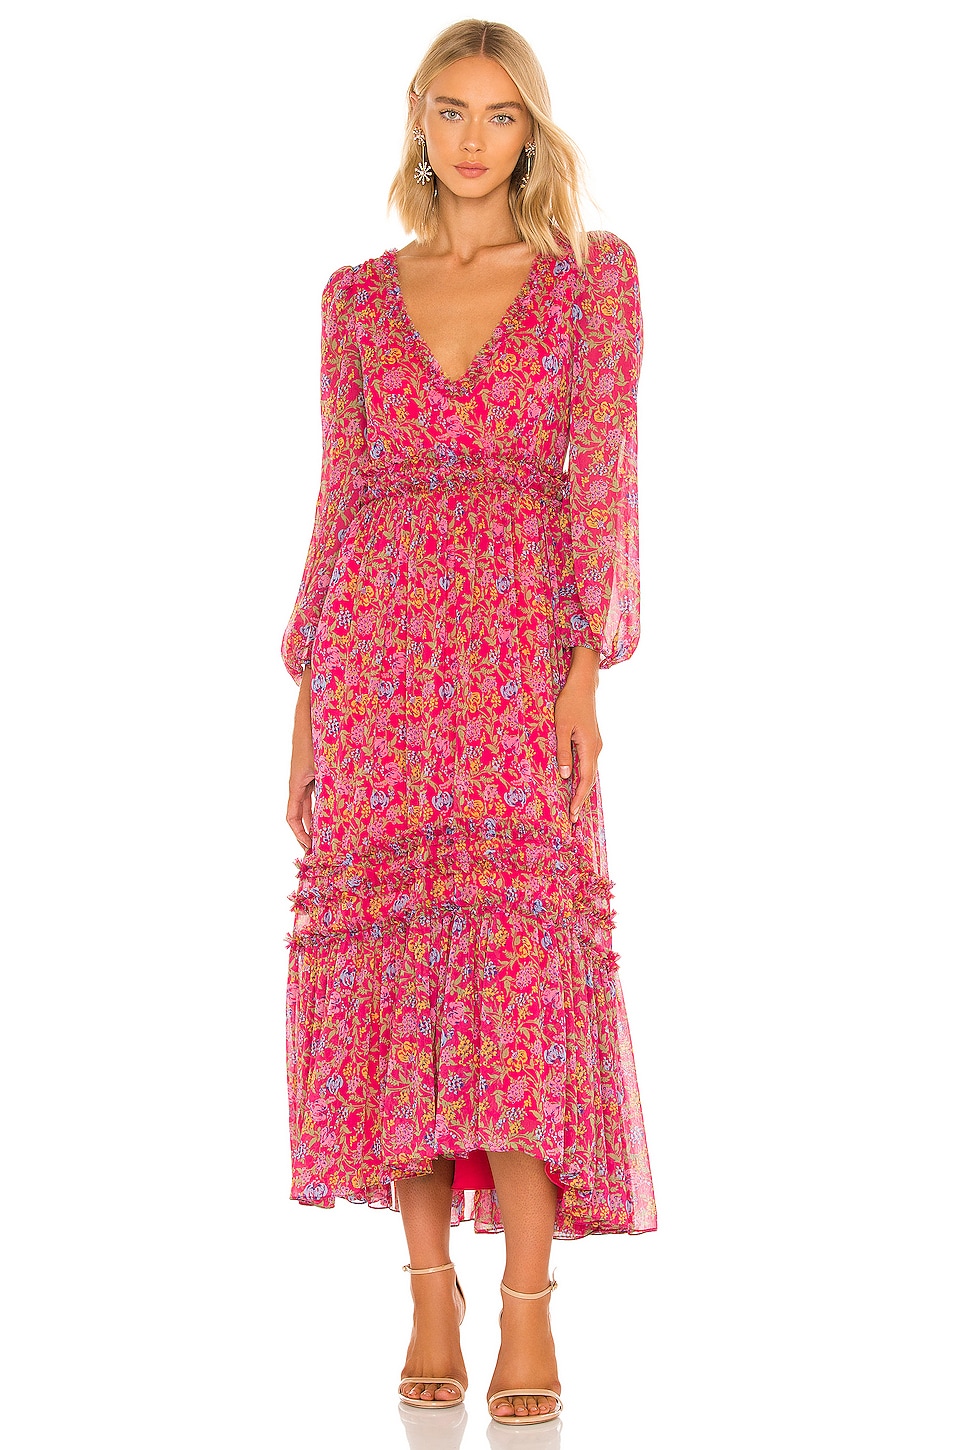 LIKELY Ruxton Dress in Fuchsia Multi | REVOLVE